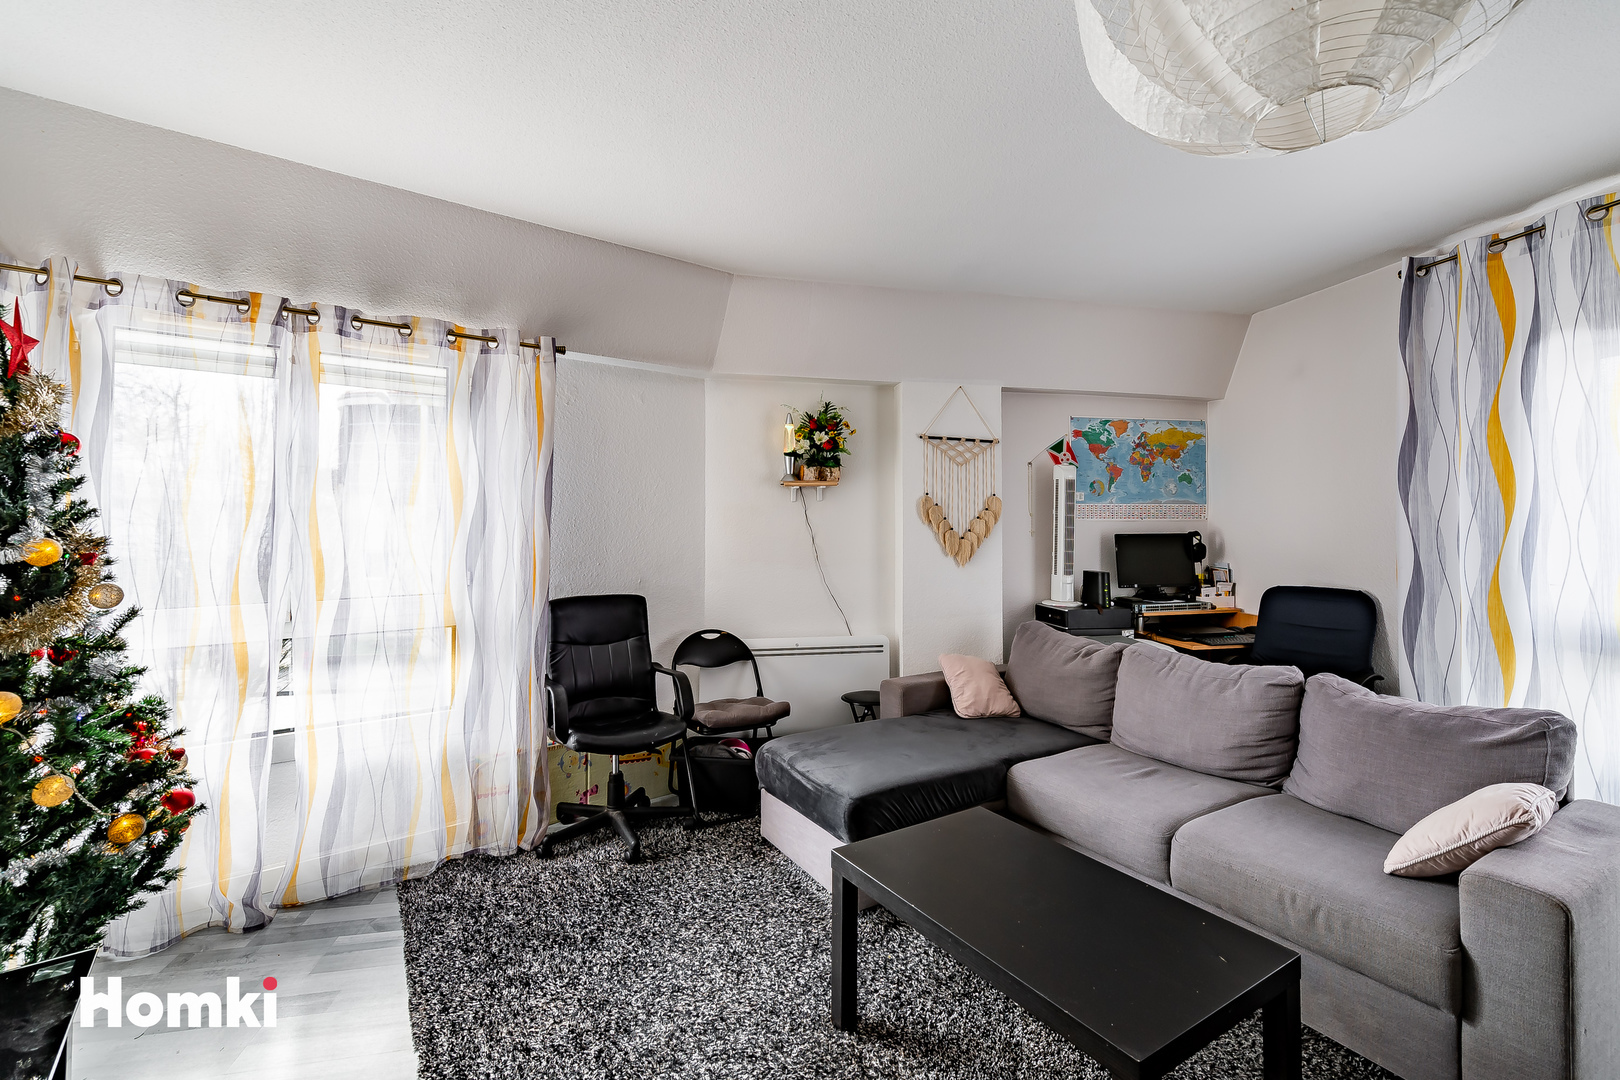 Homki - Vente Appartement  de 58.0 m² à Pessac 33600